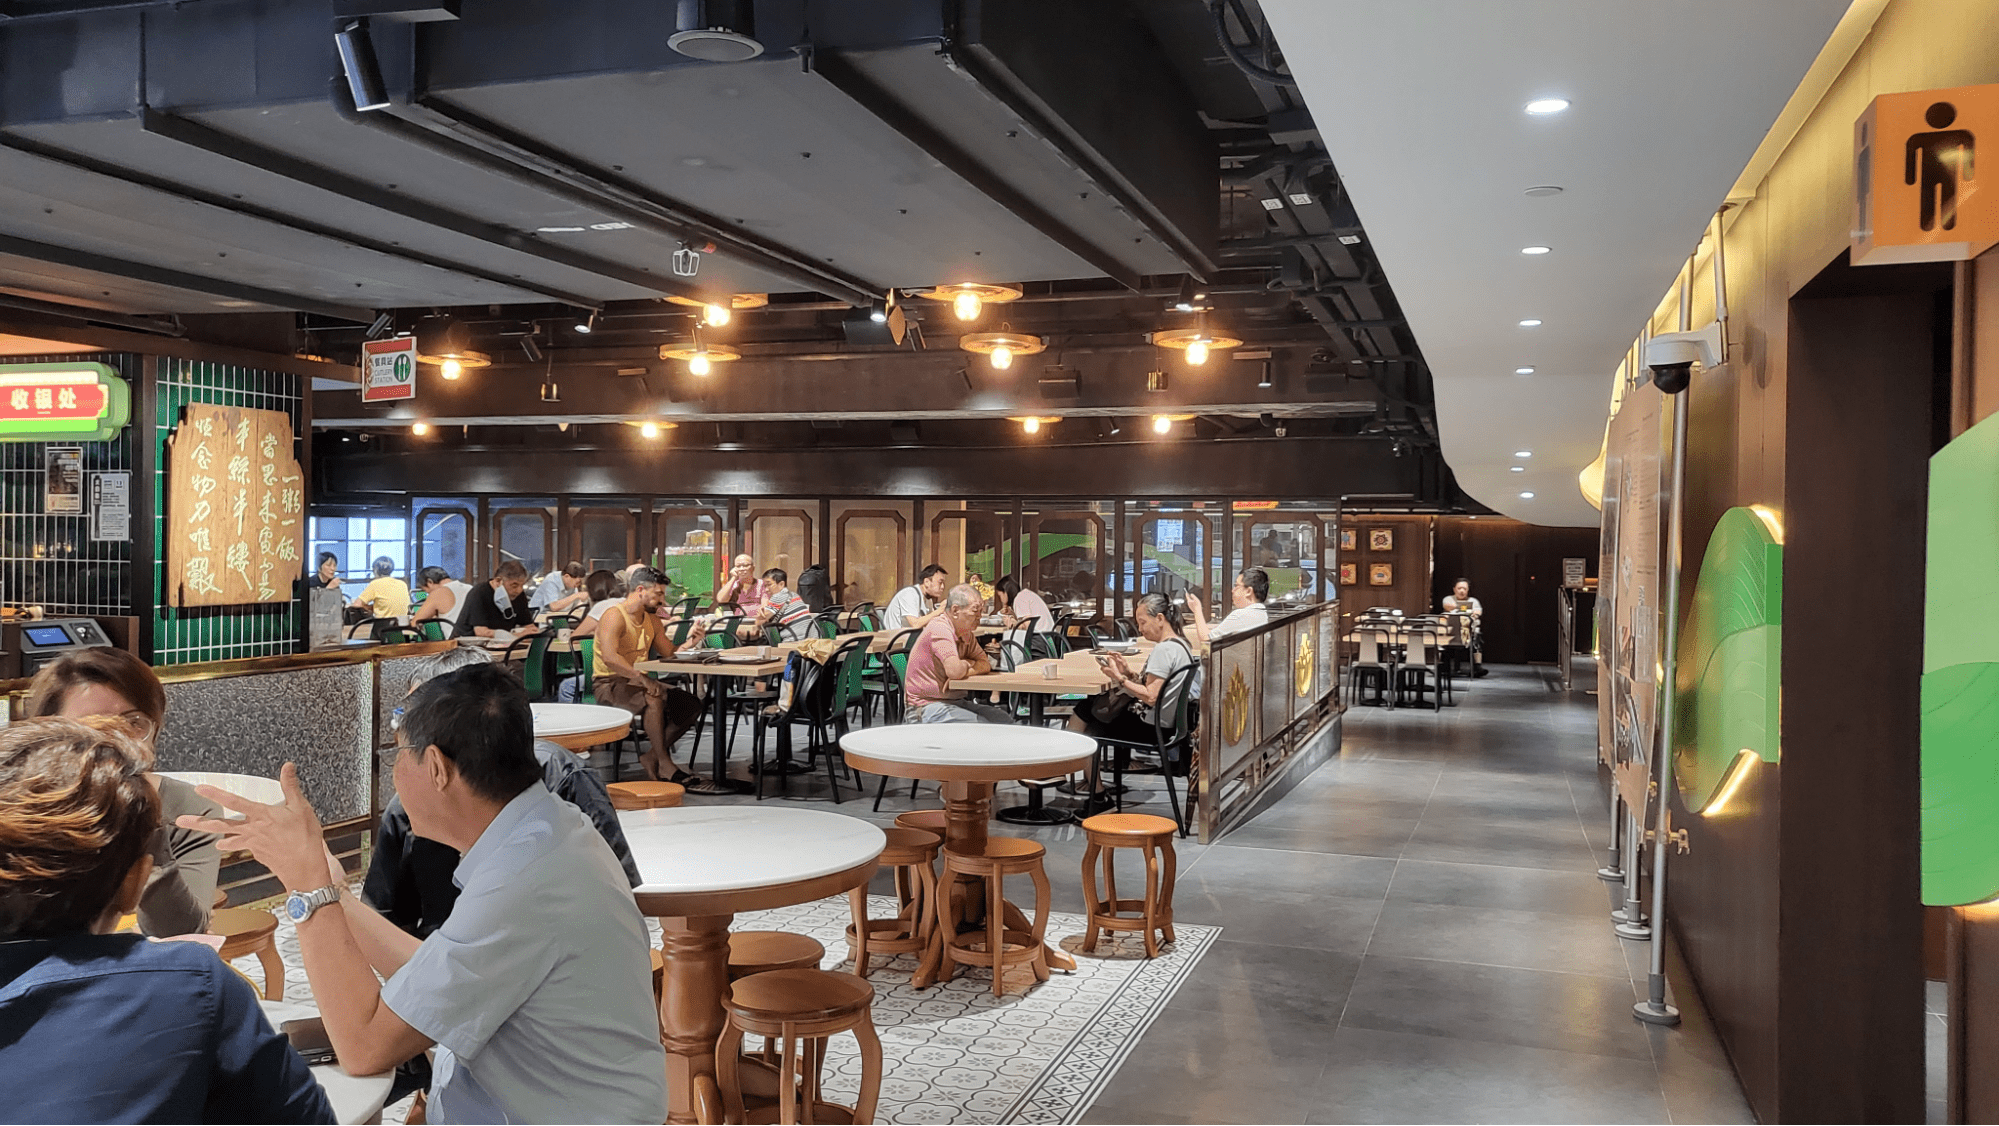 Lian xin food court - interior